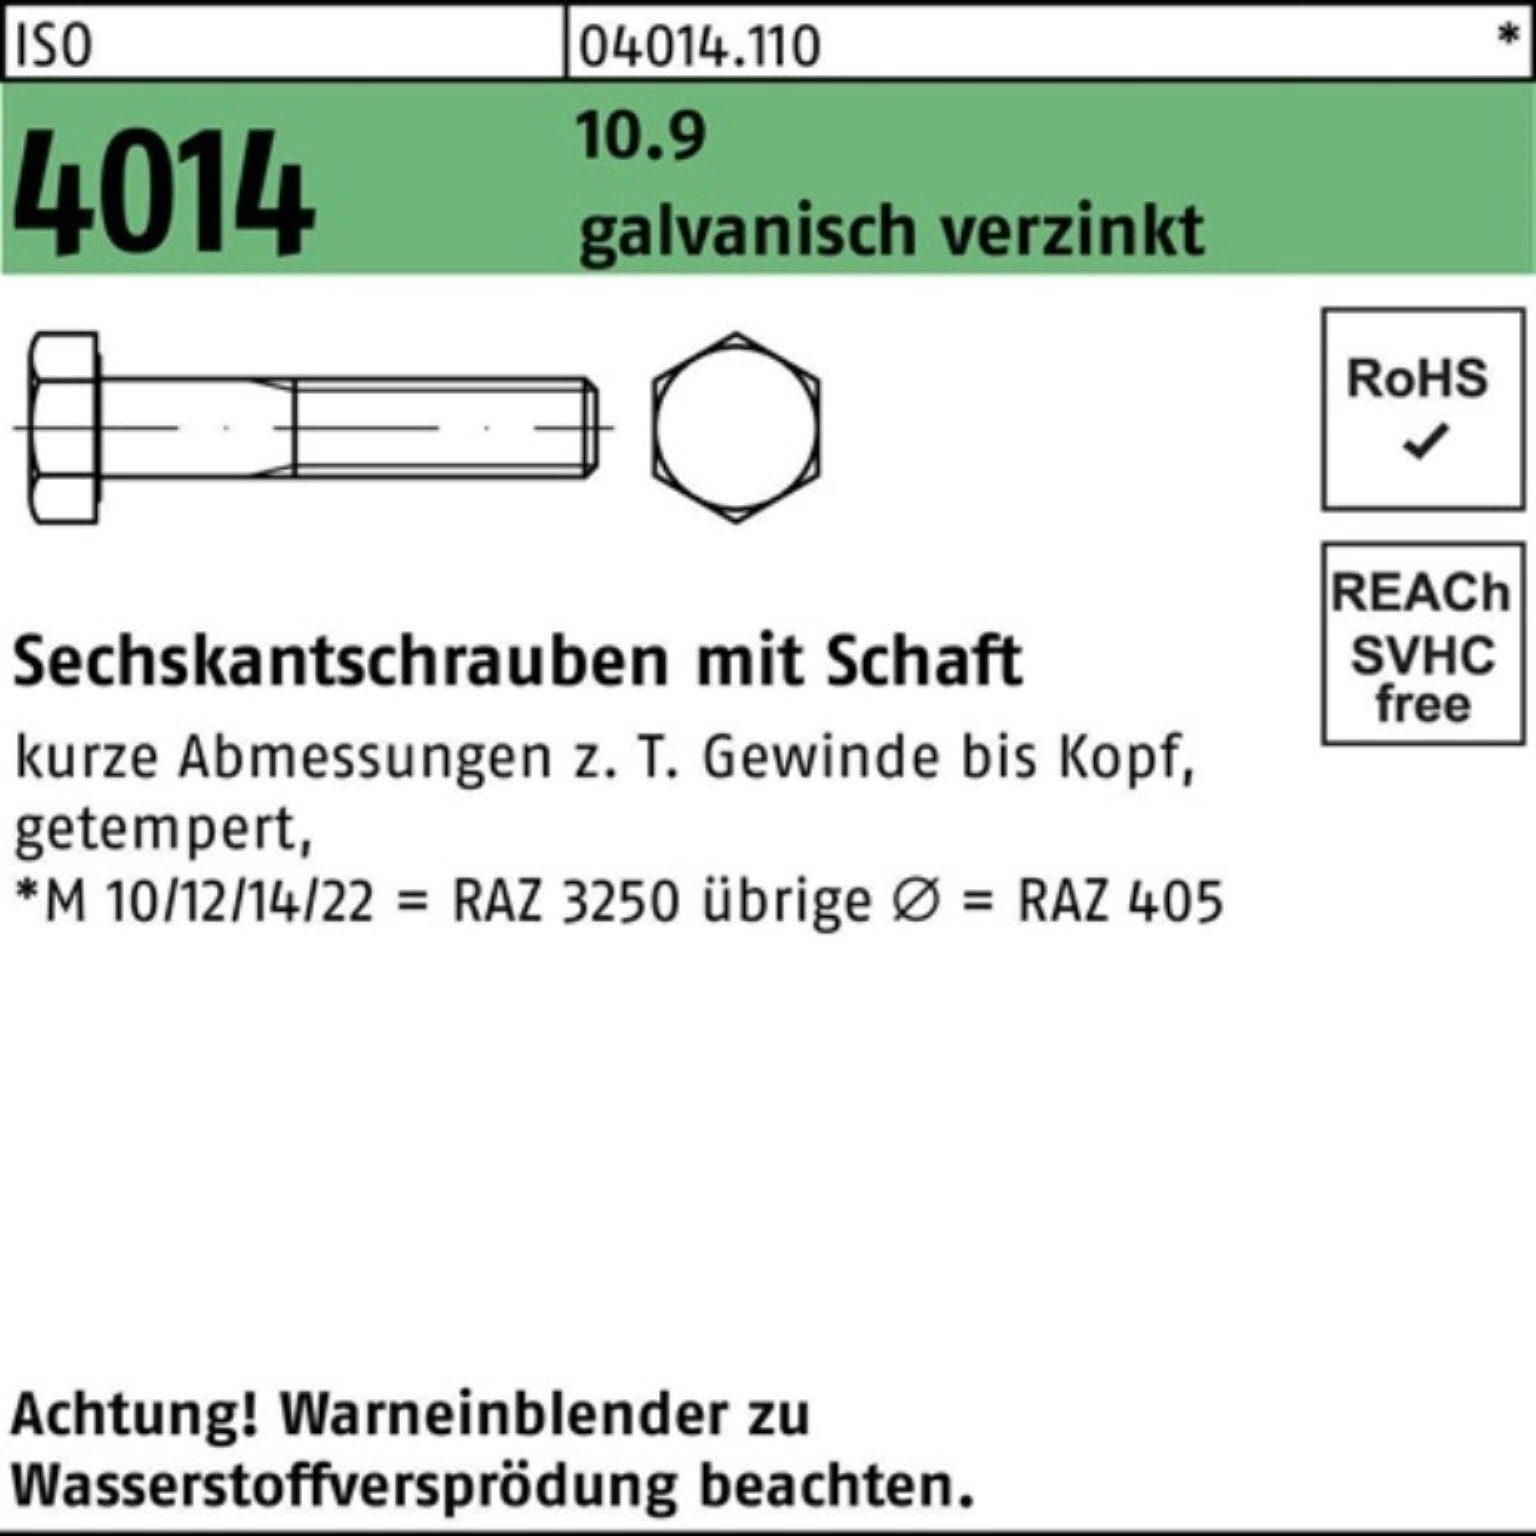 Bufab Sechskantschraube 100er Pack Sechskantschraube ISO 4014 Schaft M30x 180 10.9 galv.verz. | Schrauben